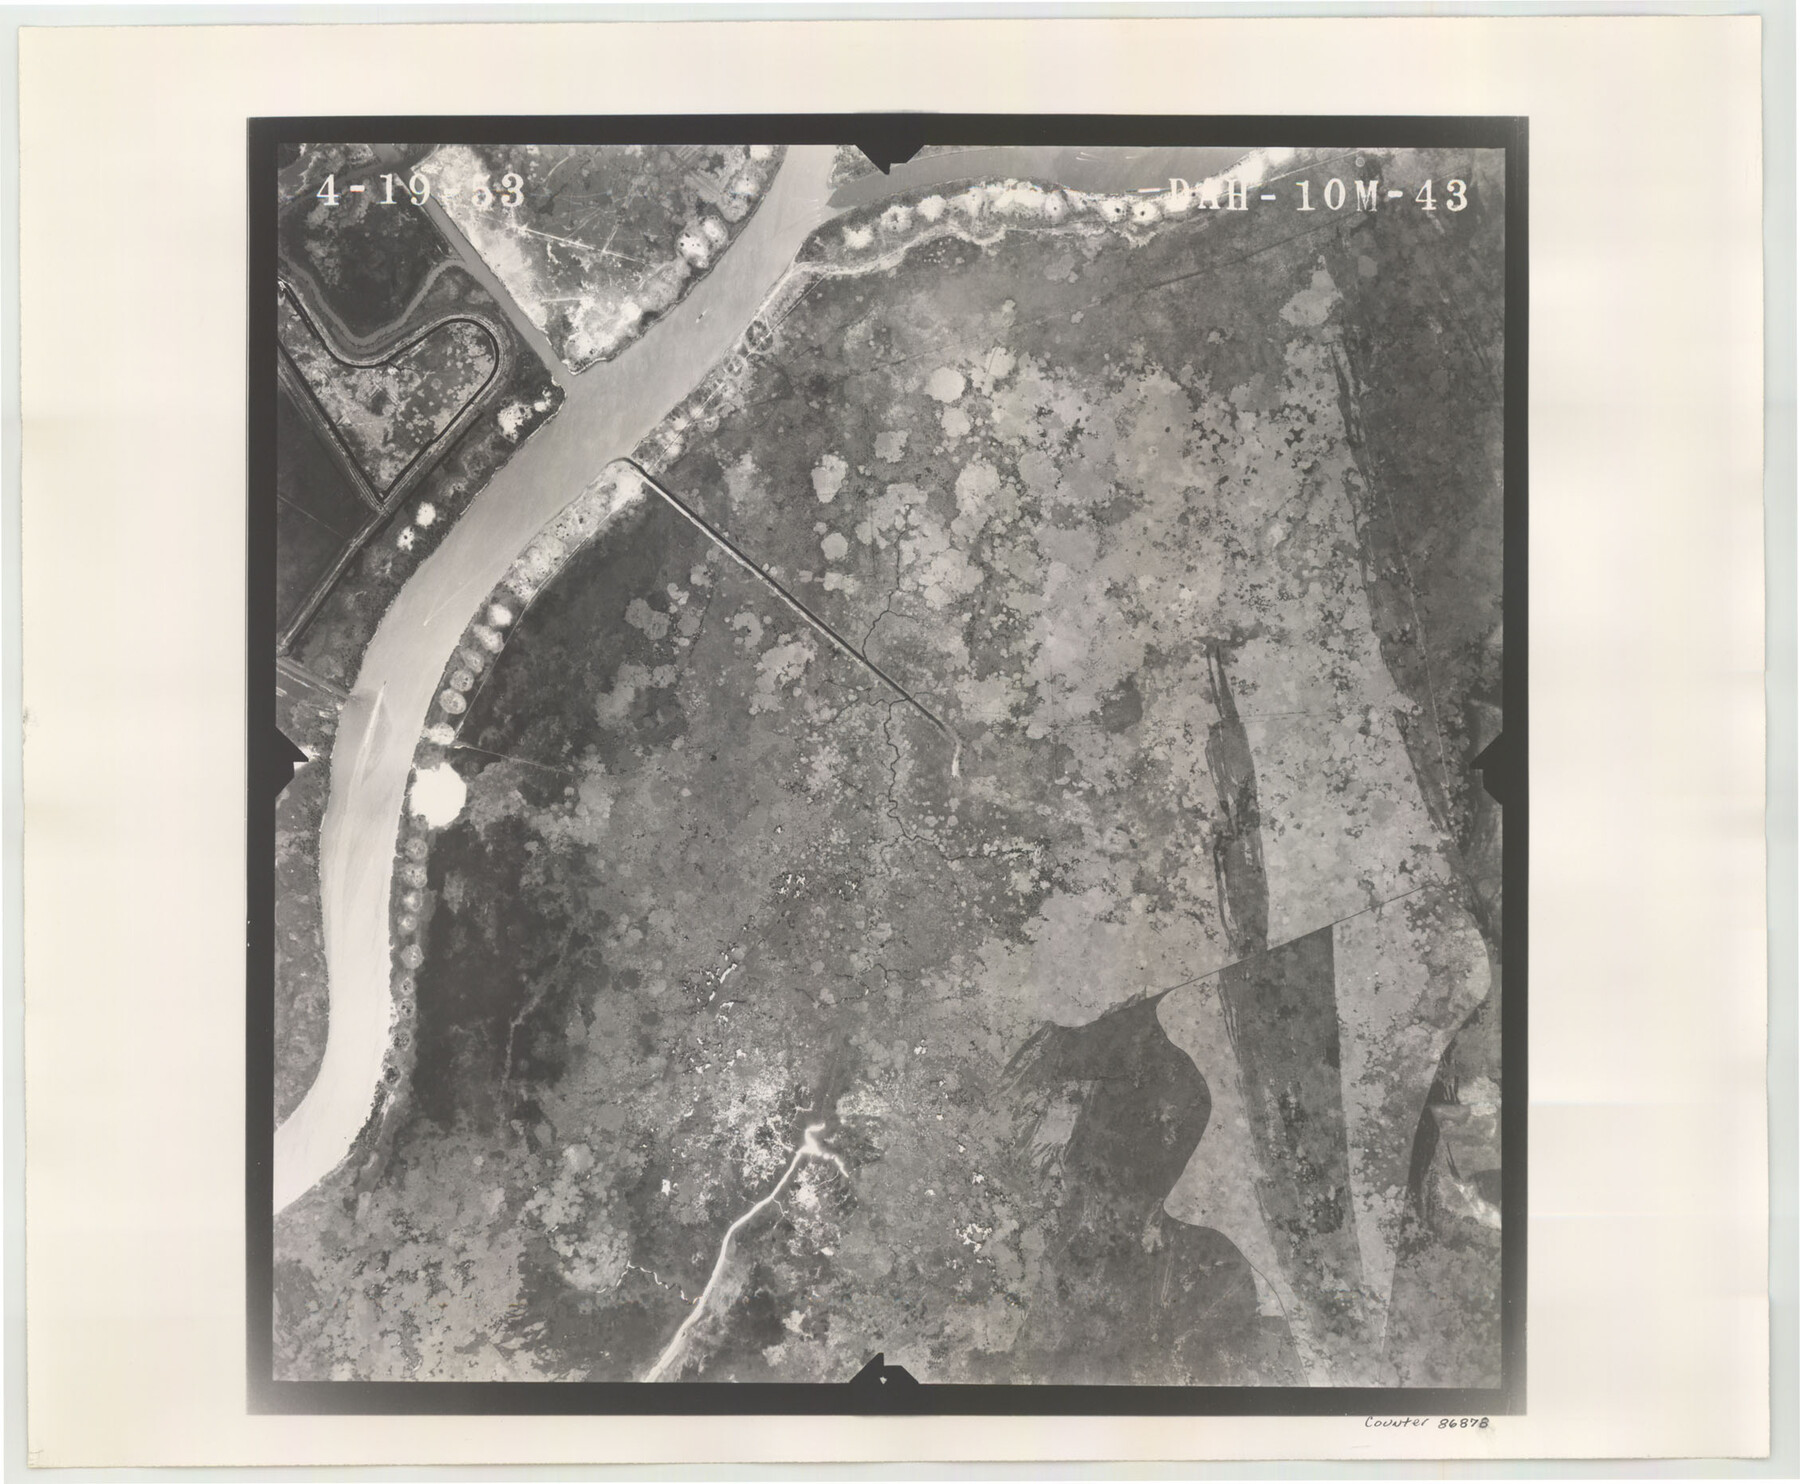 86878, Flight Mission No. DAH-10M, Frame 43, Orange County, General Map Collection